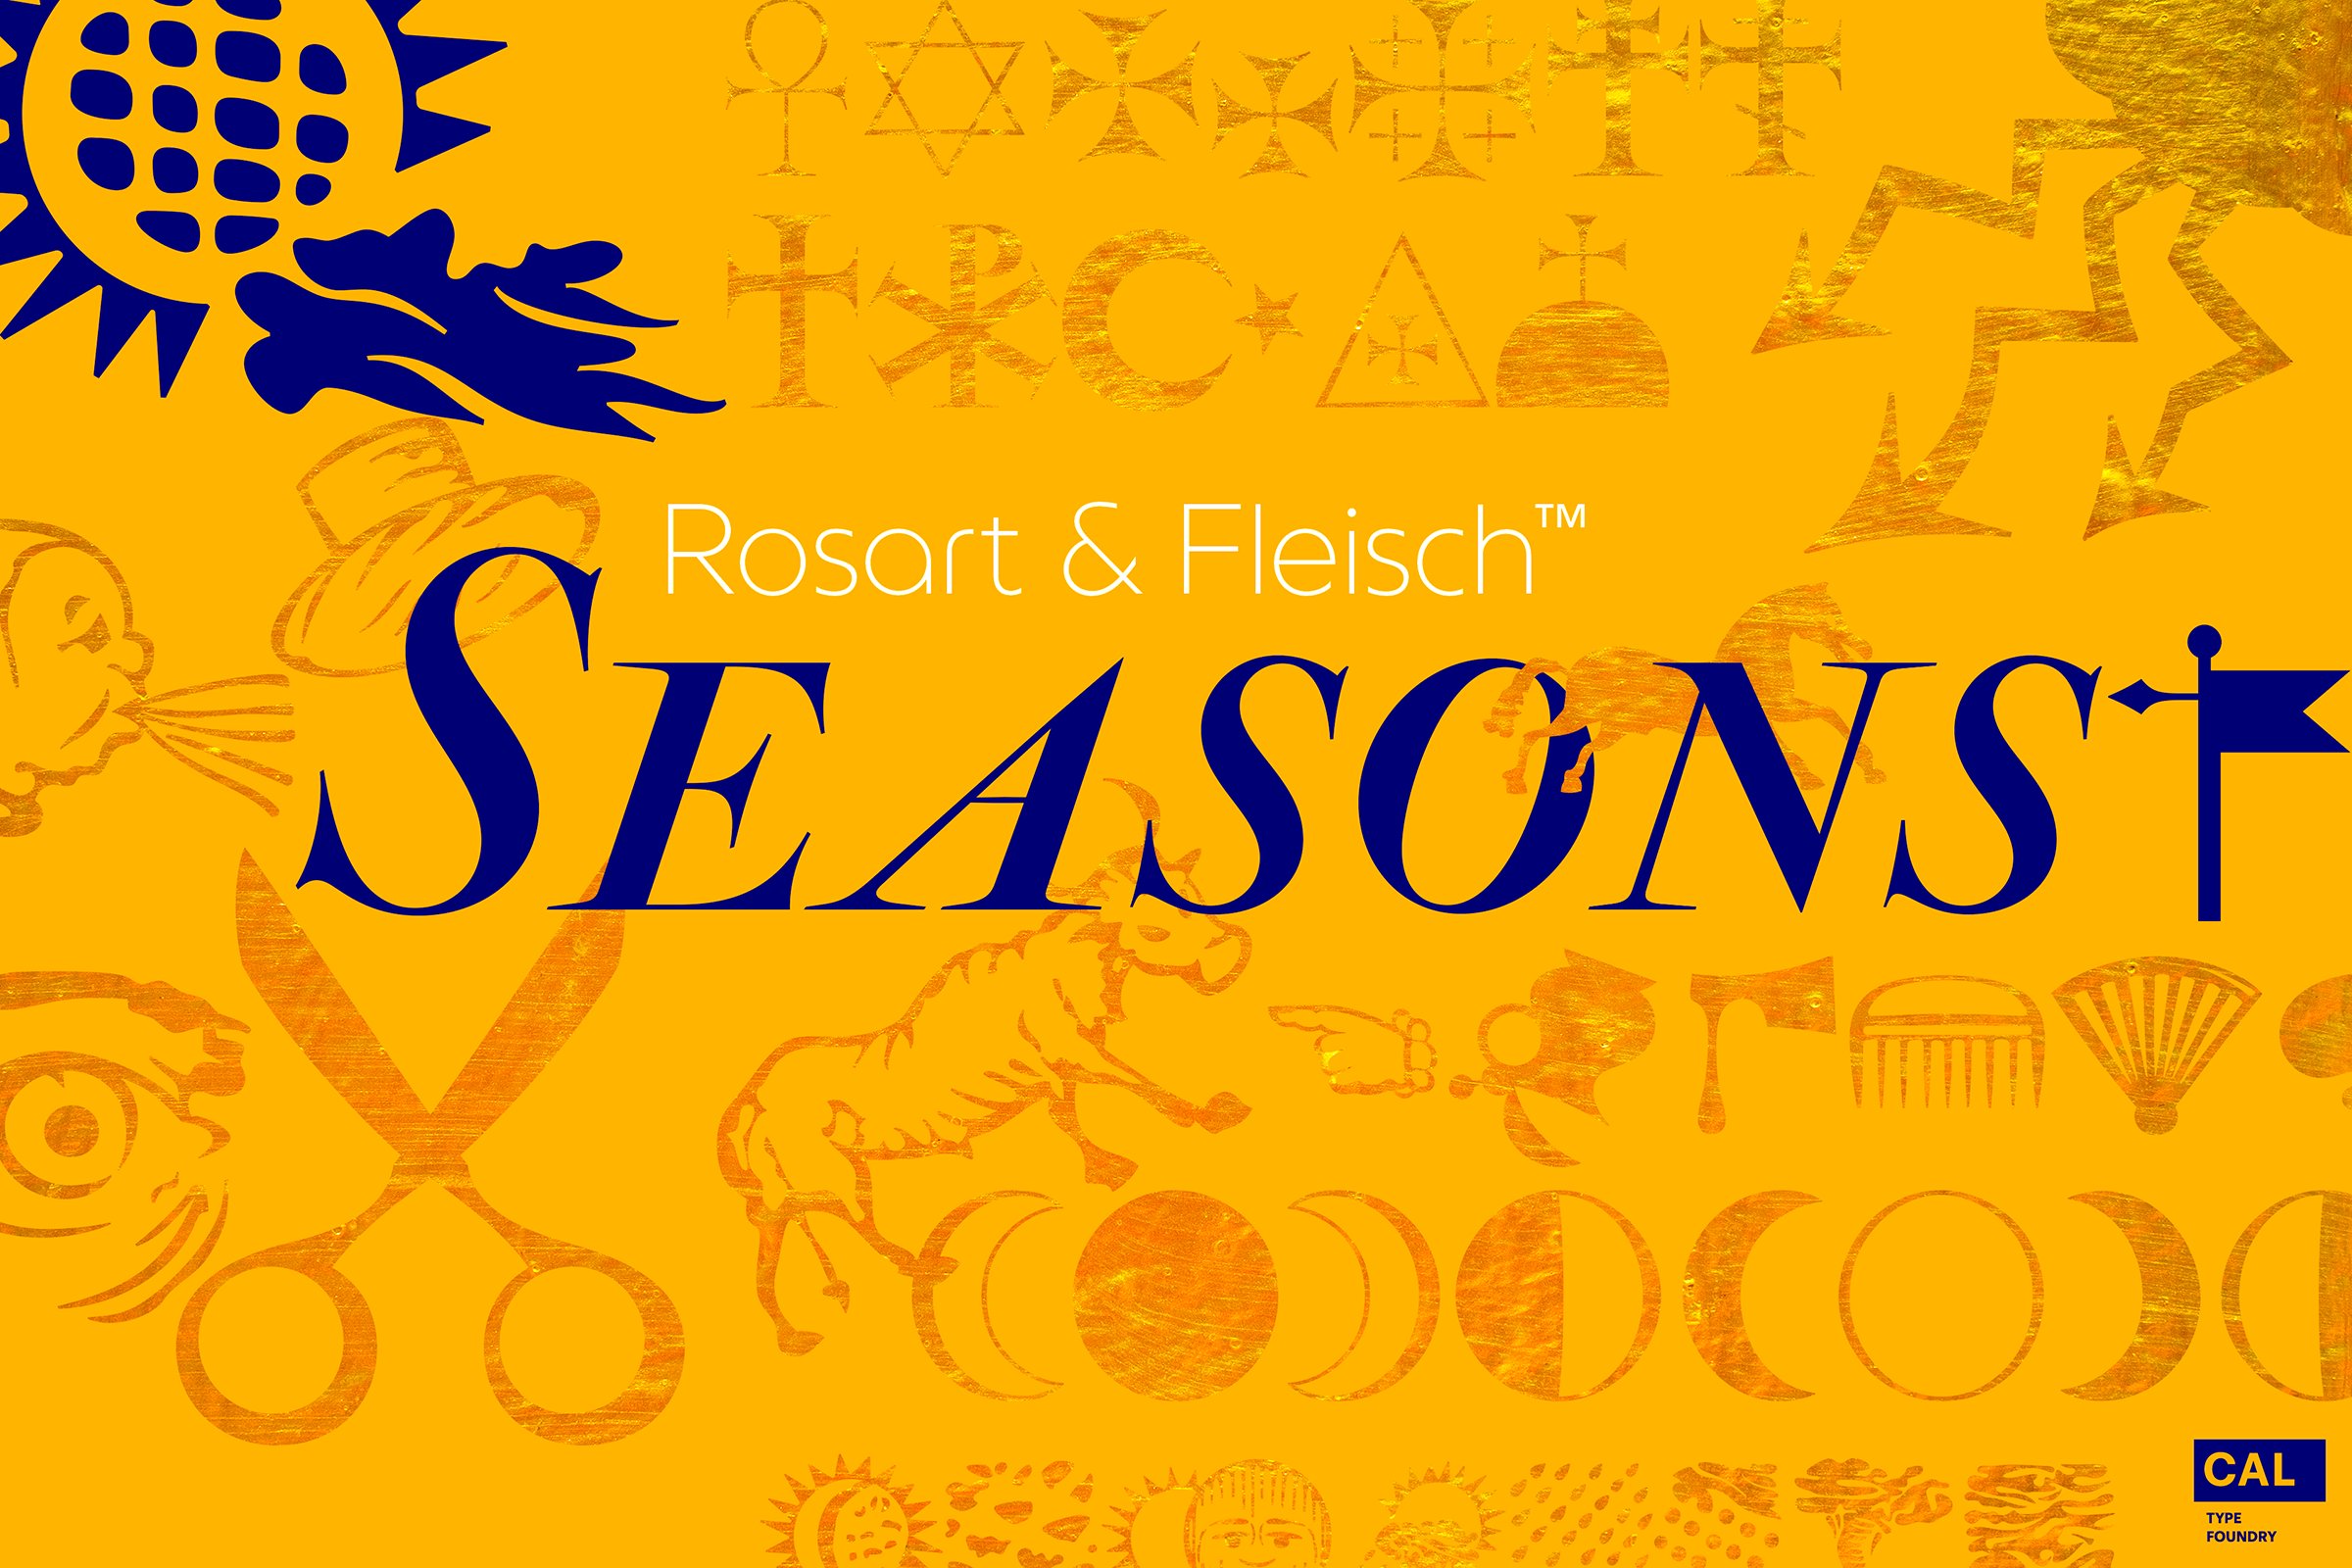 Rosart & Fleisch SEASONS Symbol Set cover image.